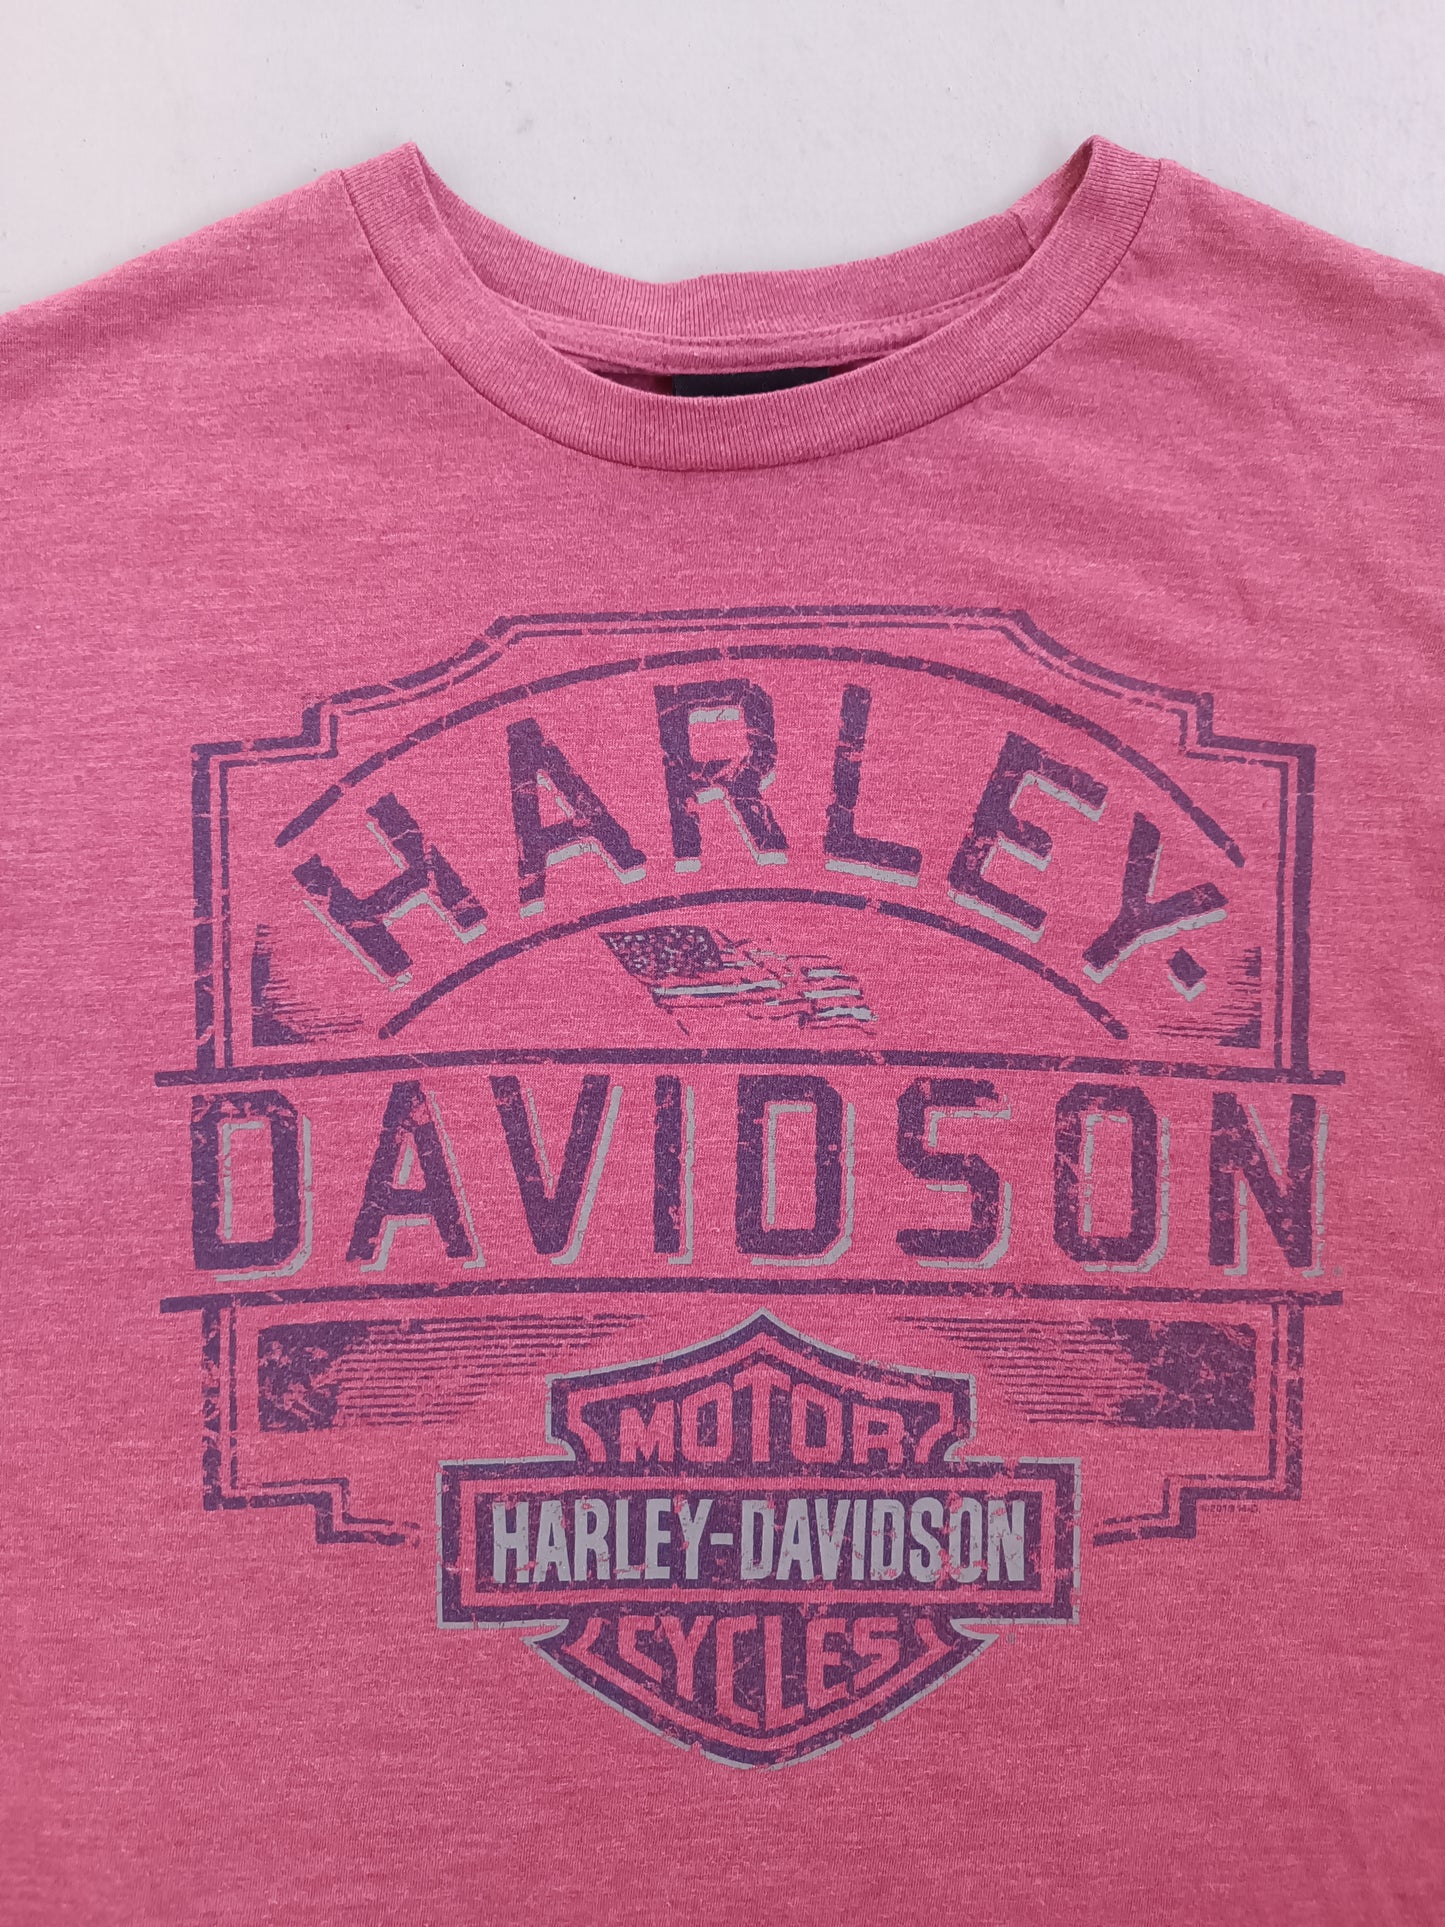 Harley Davidson Lewiston - L